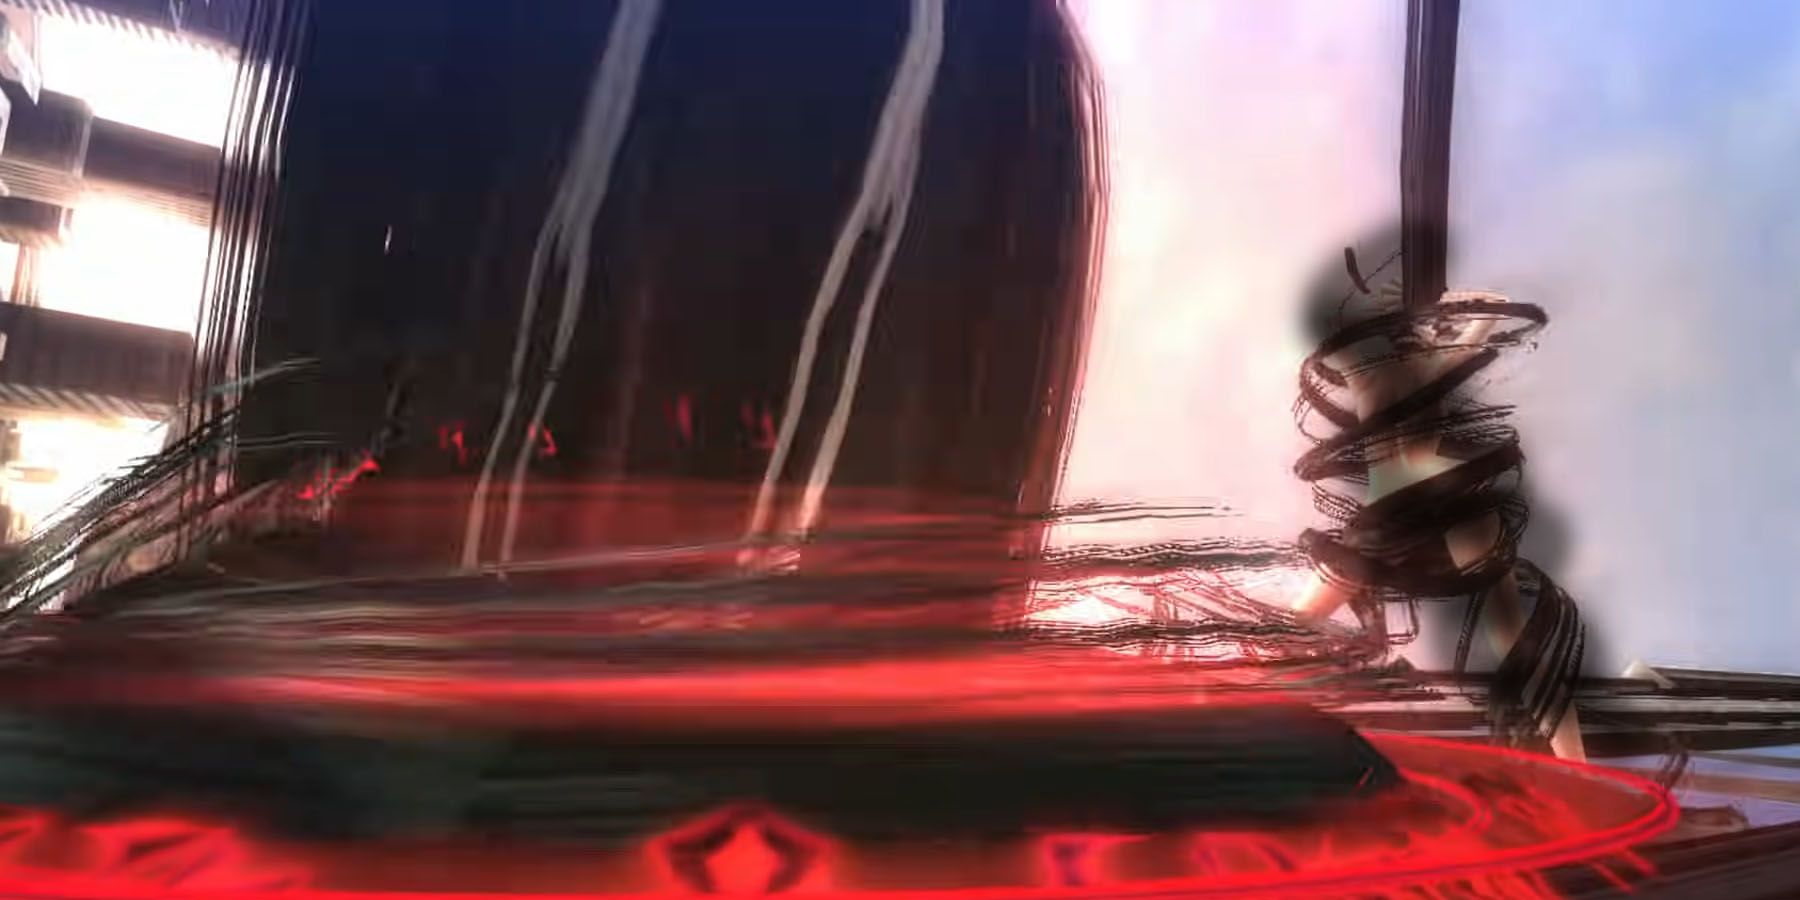 Bayonetta conjuring a summoning portal